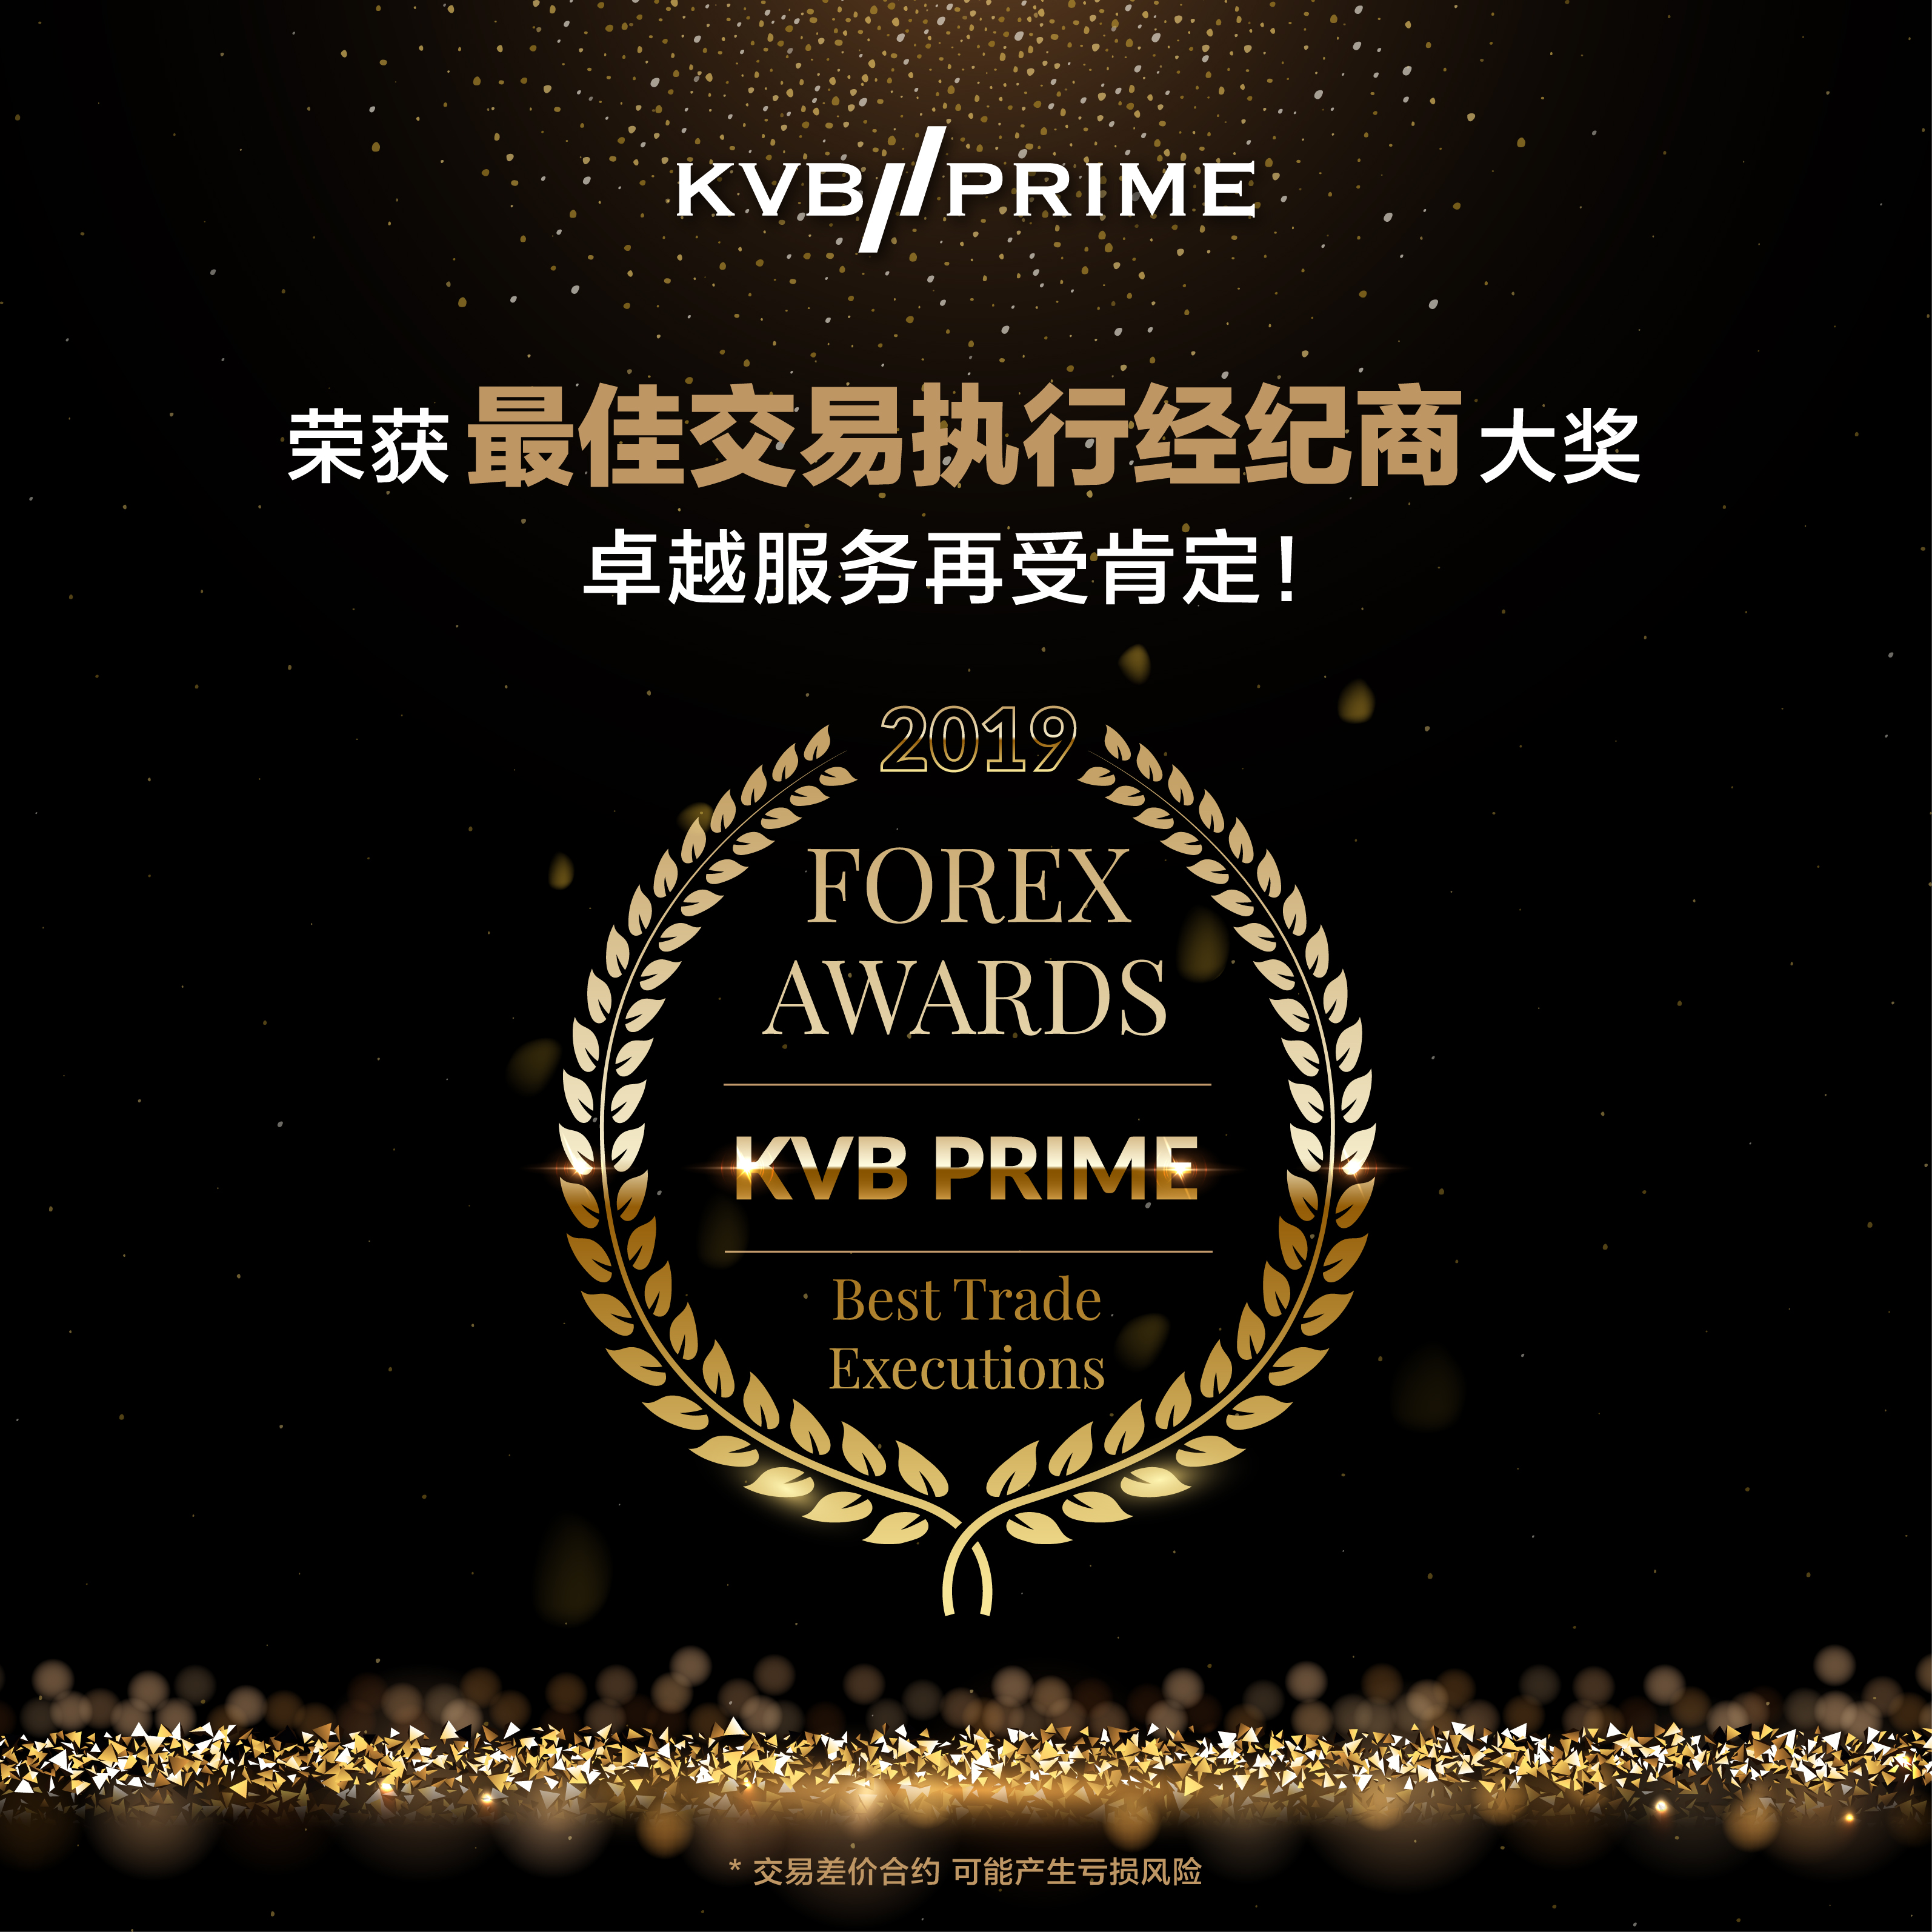 KVB PRIME 荣获“最佳交易执行经纪商”大奖，卓越服务再受肯定!